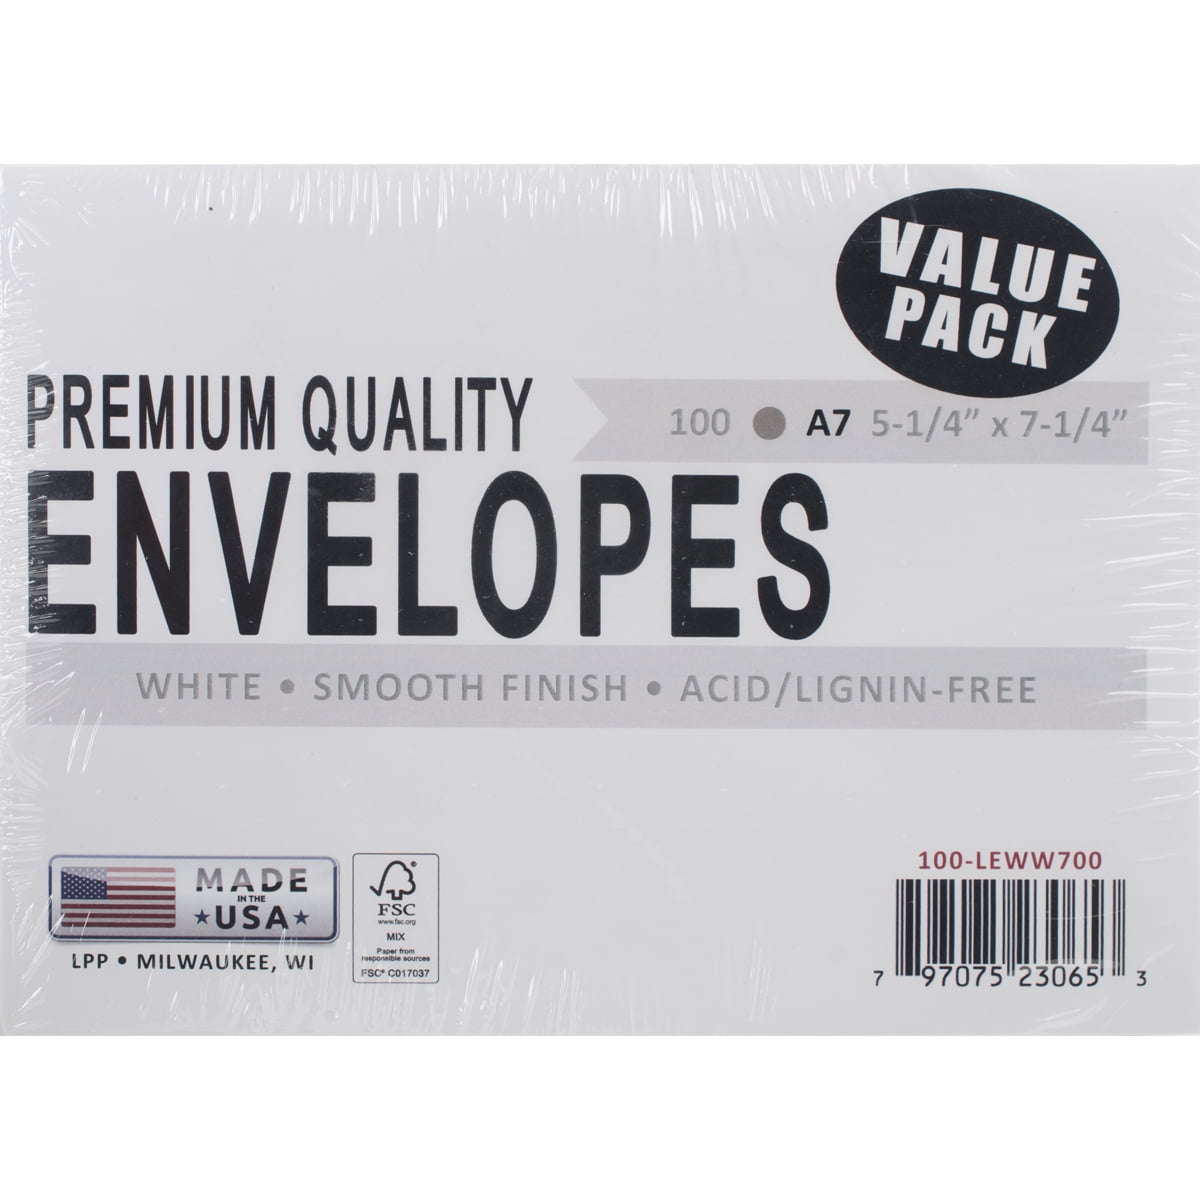 American Crafts A7 Cards & Envelopes (5.25X7.25) 12/Pkg - White